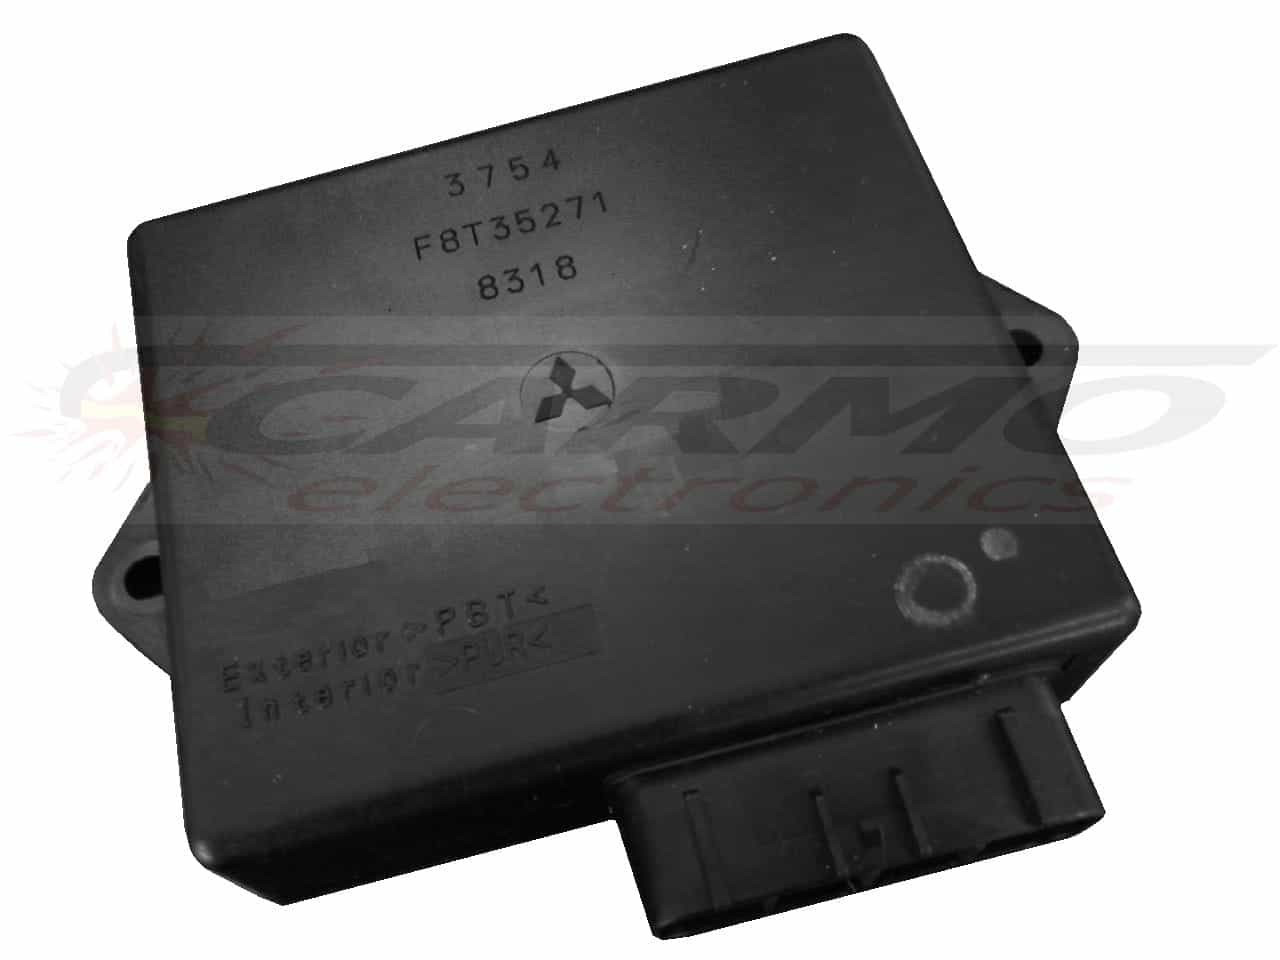 STX900 STS900 CDI ECU igniter module F8T35271 / 21119-3754 / 21119-3763 / FT8T40671